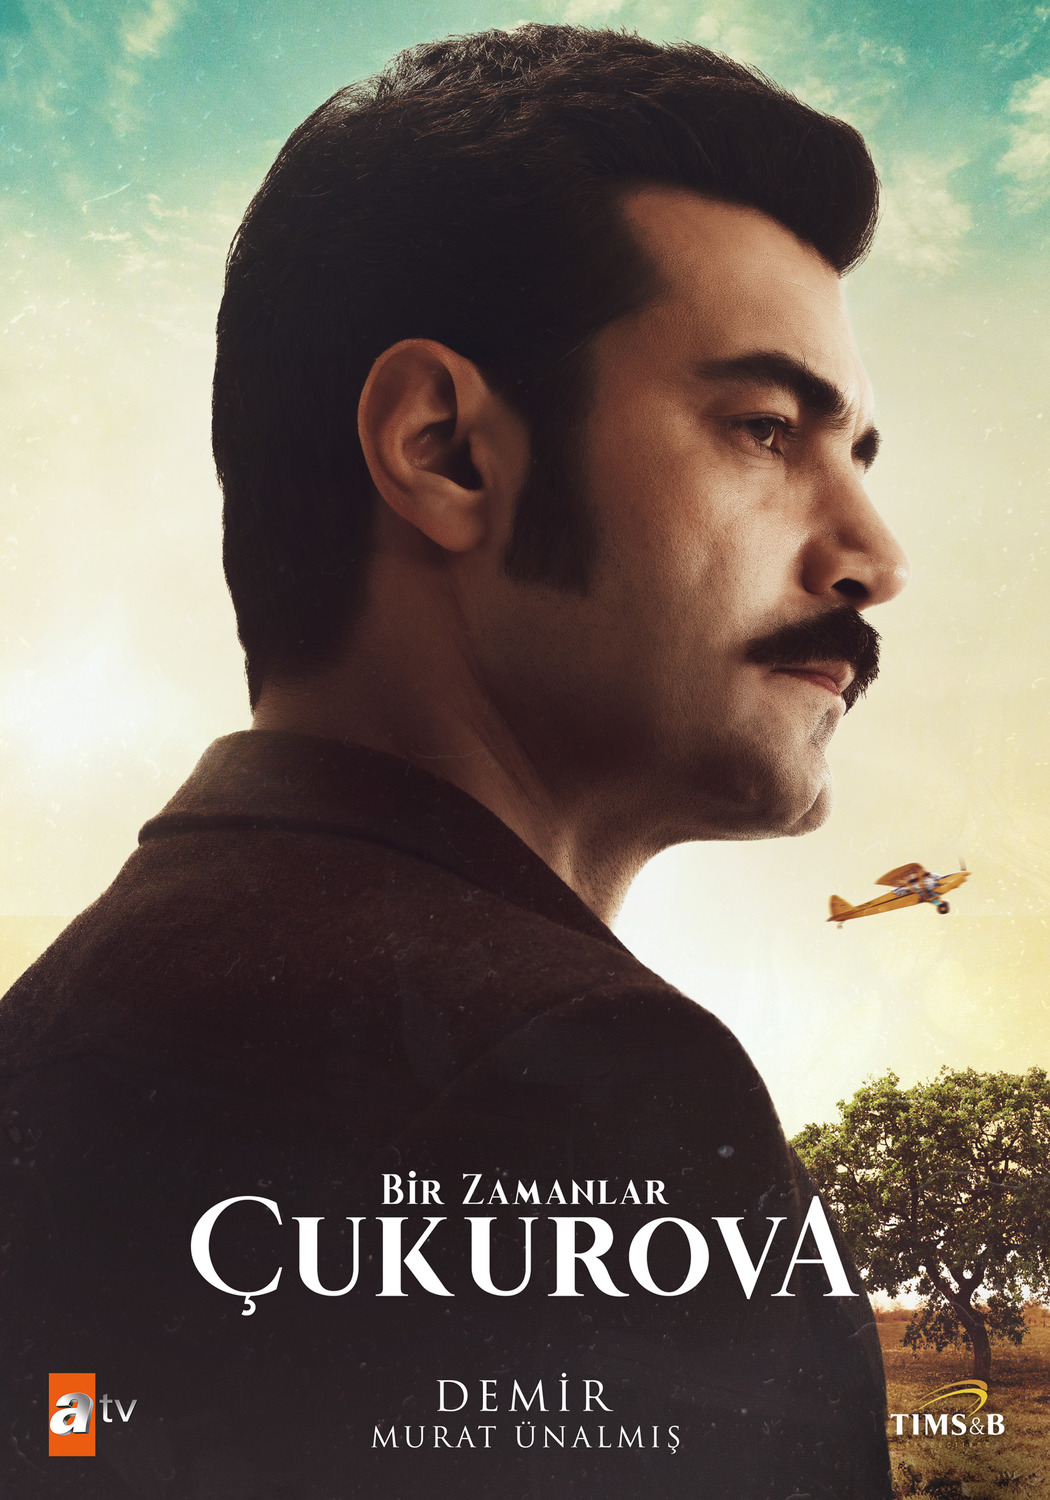 Extra Large TV Poster Image for Bir zamanlar Çukurova (#10 of 12)